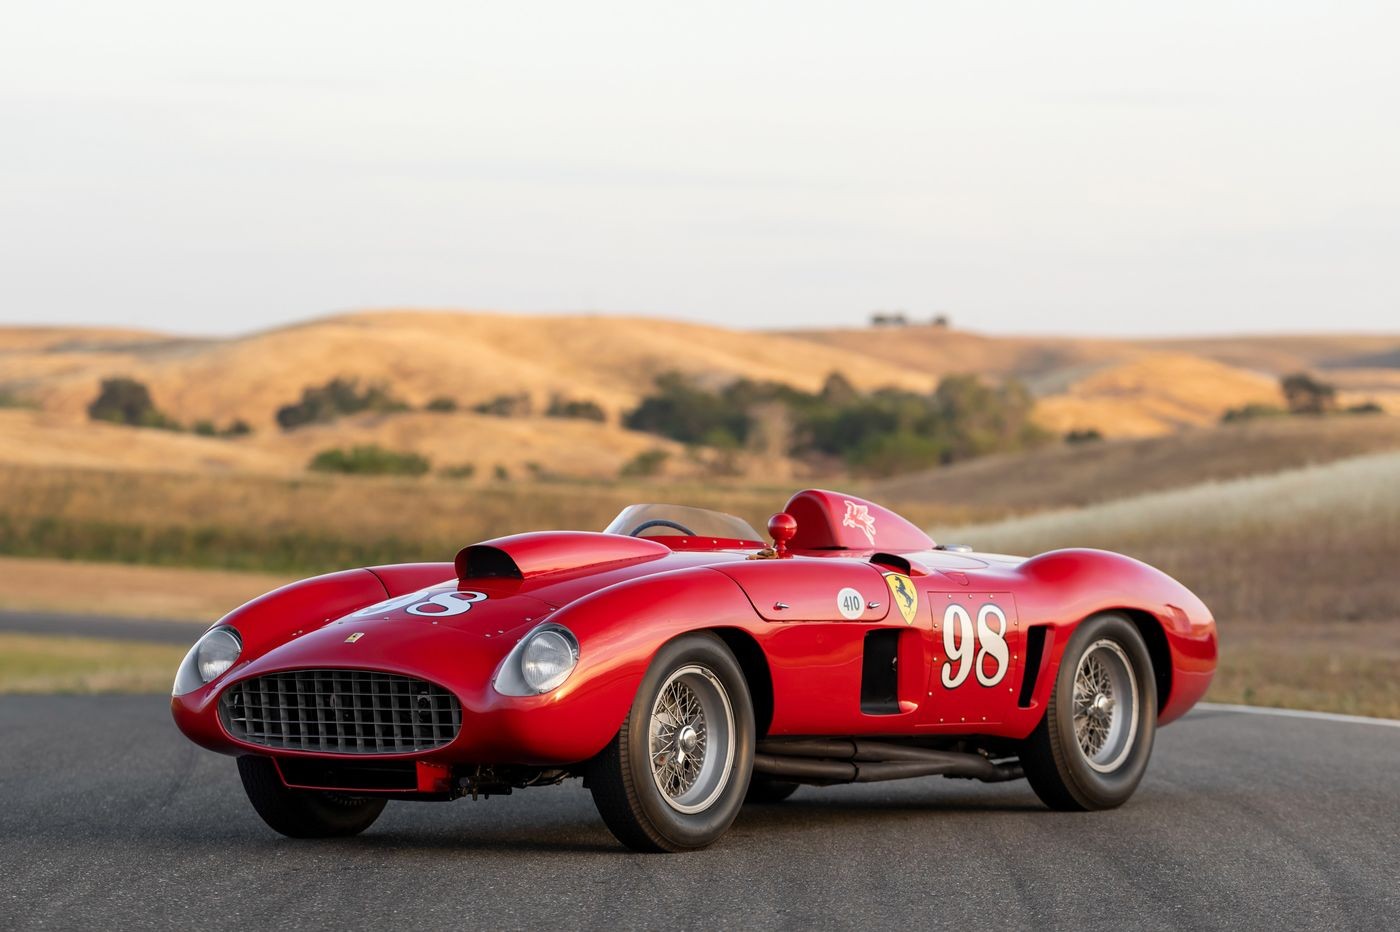 Monterey vintage auto auction coming soon...